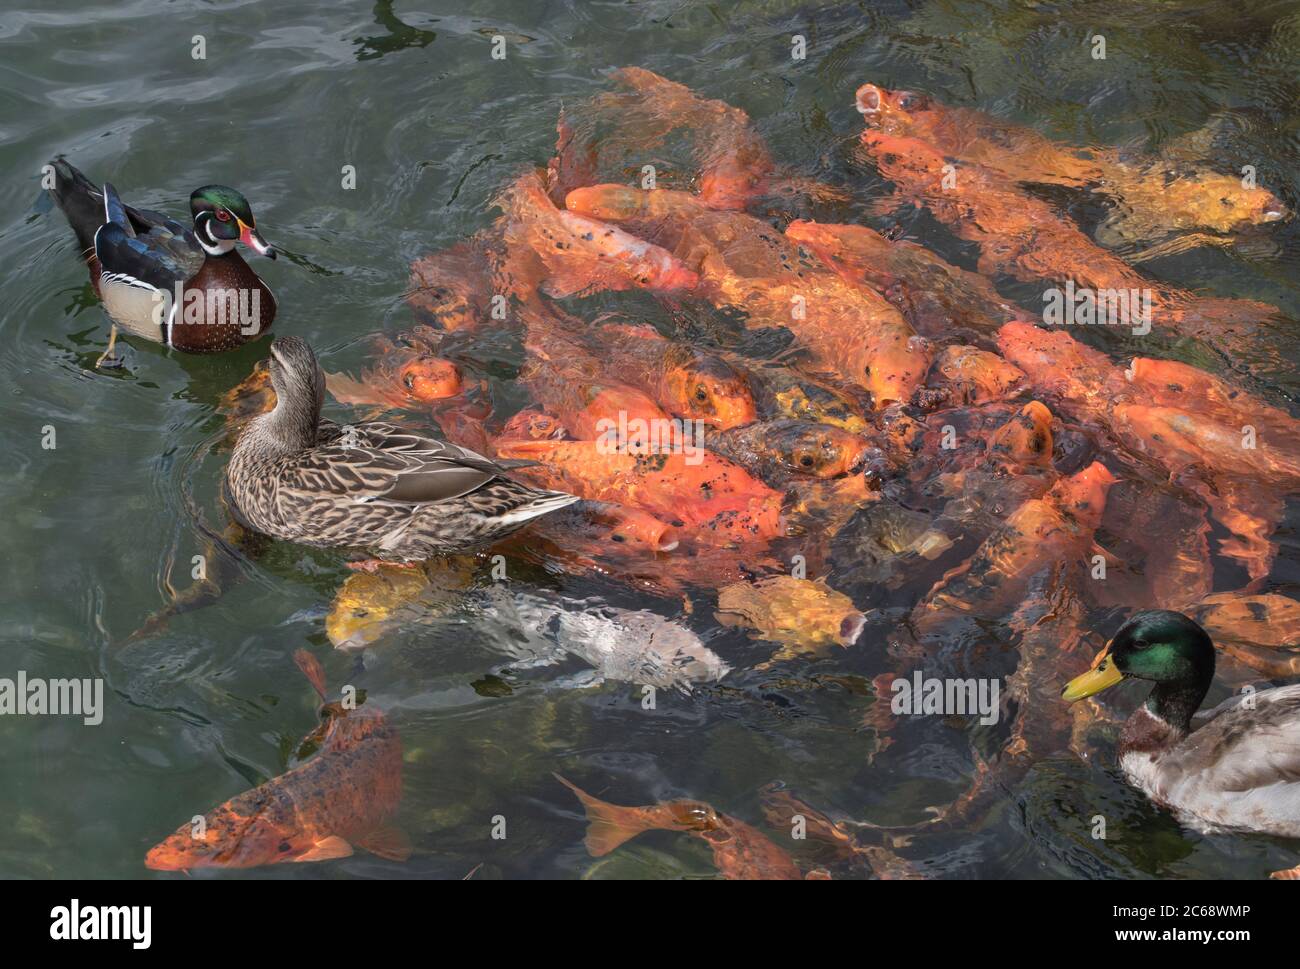 Wunderschön gepflegter See in Phoenix Metro Gegend mit wilden Leben, Enten Stockfoto